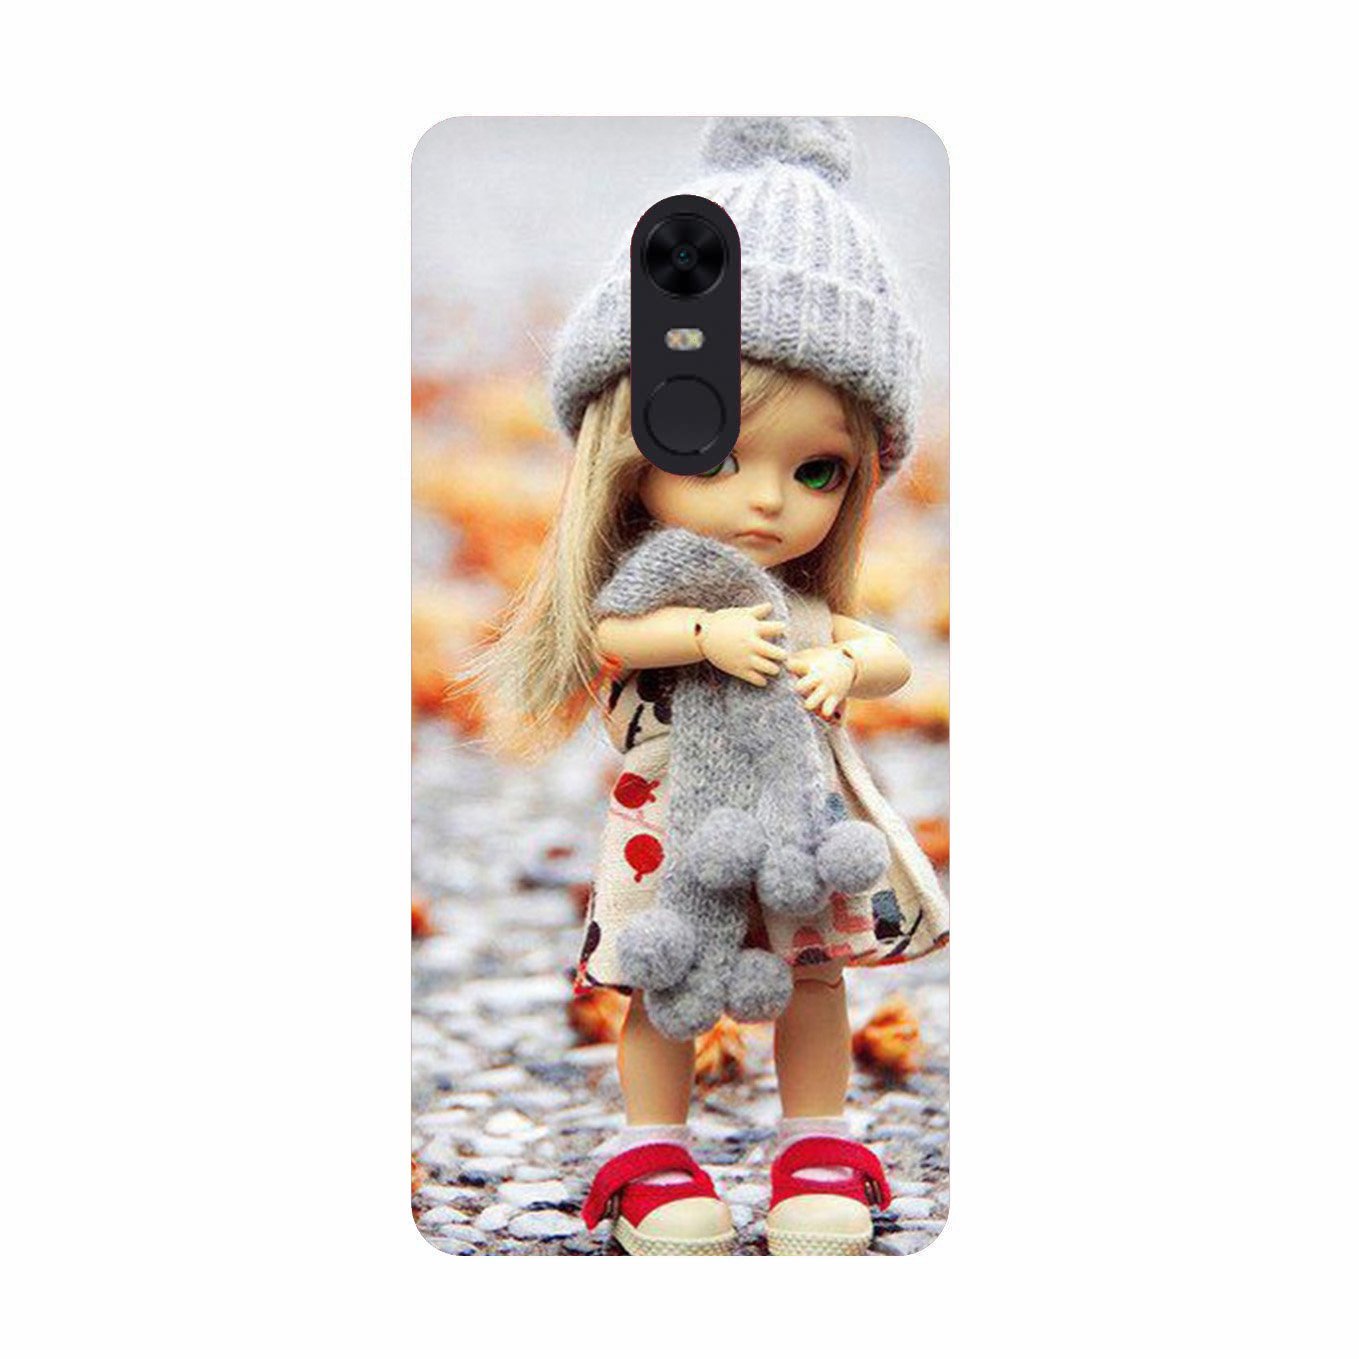 Cute Doll Case for Redmi Note 5